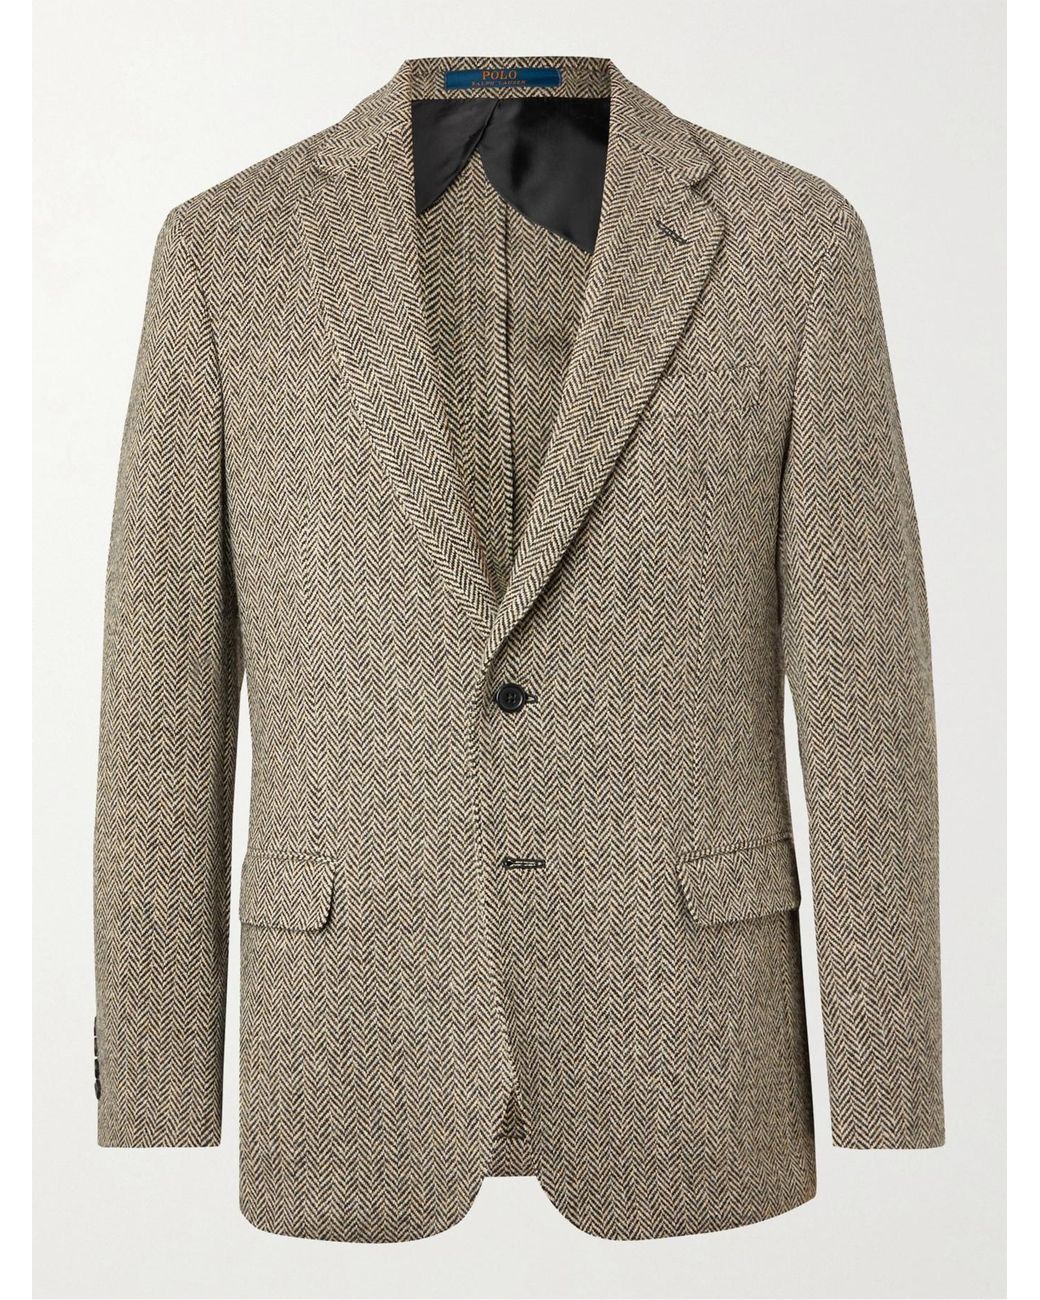 Polo Ralph Lauren Herringbone Wool-blend Blazer for Men - Lyst